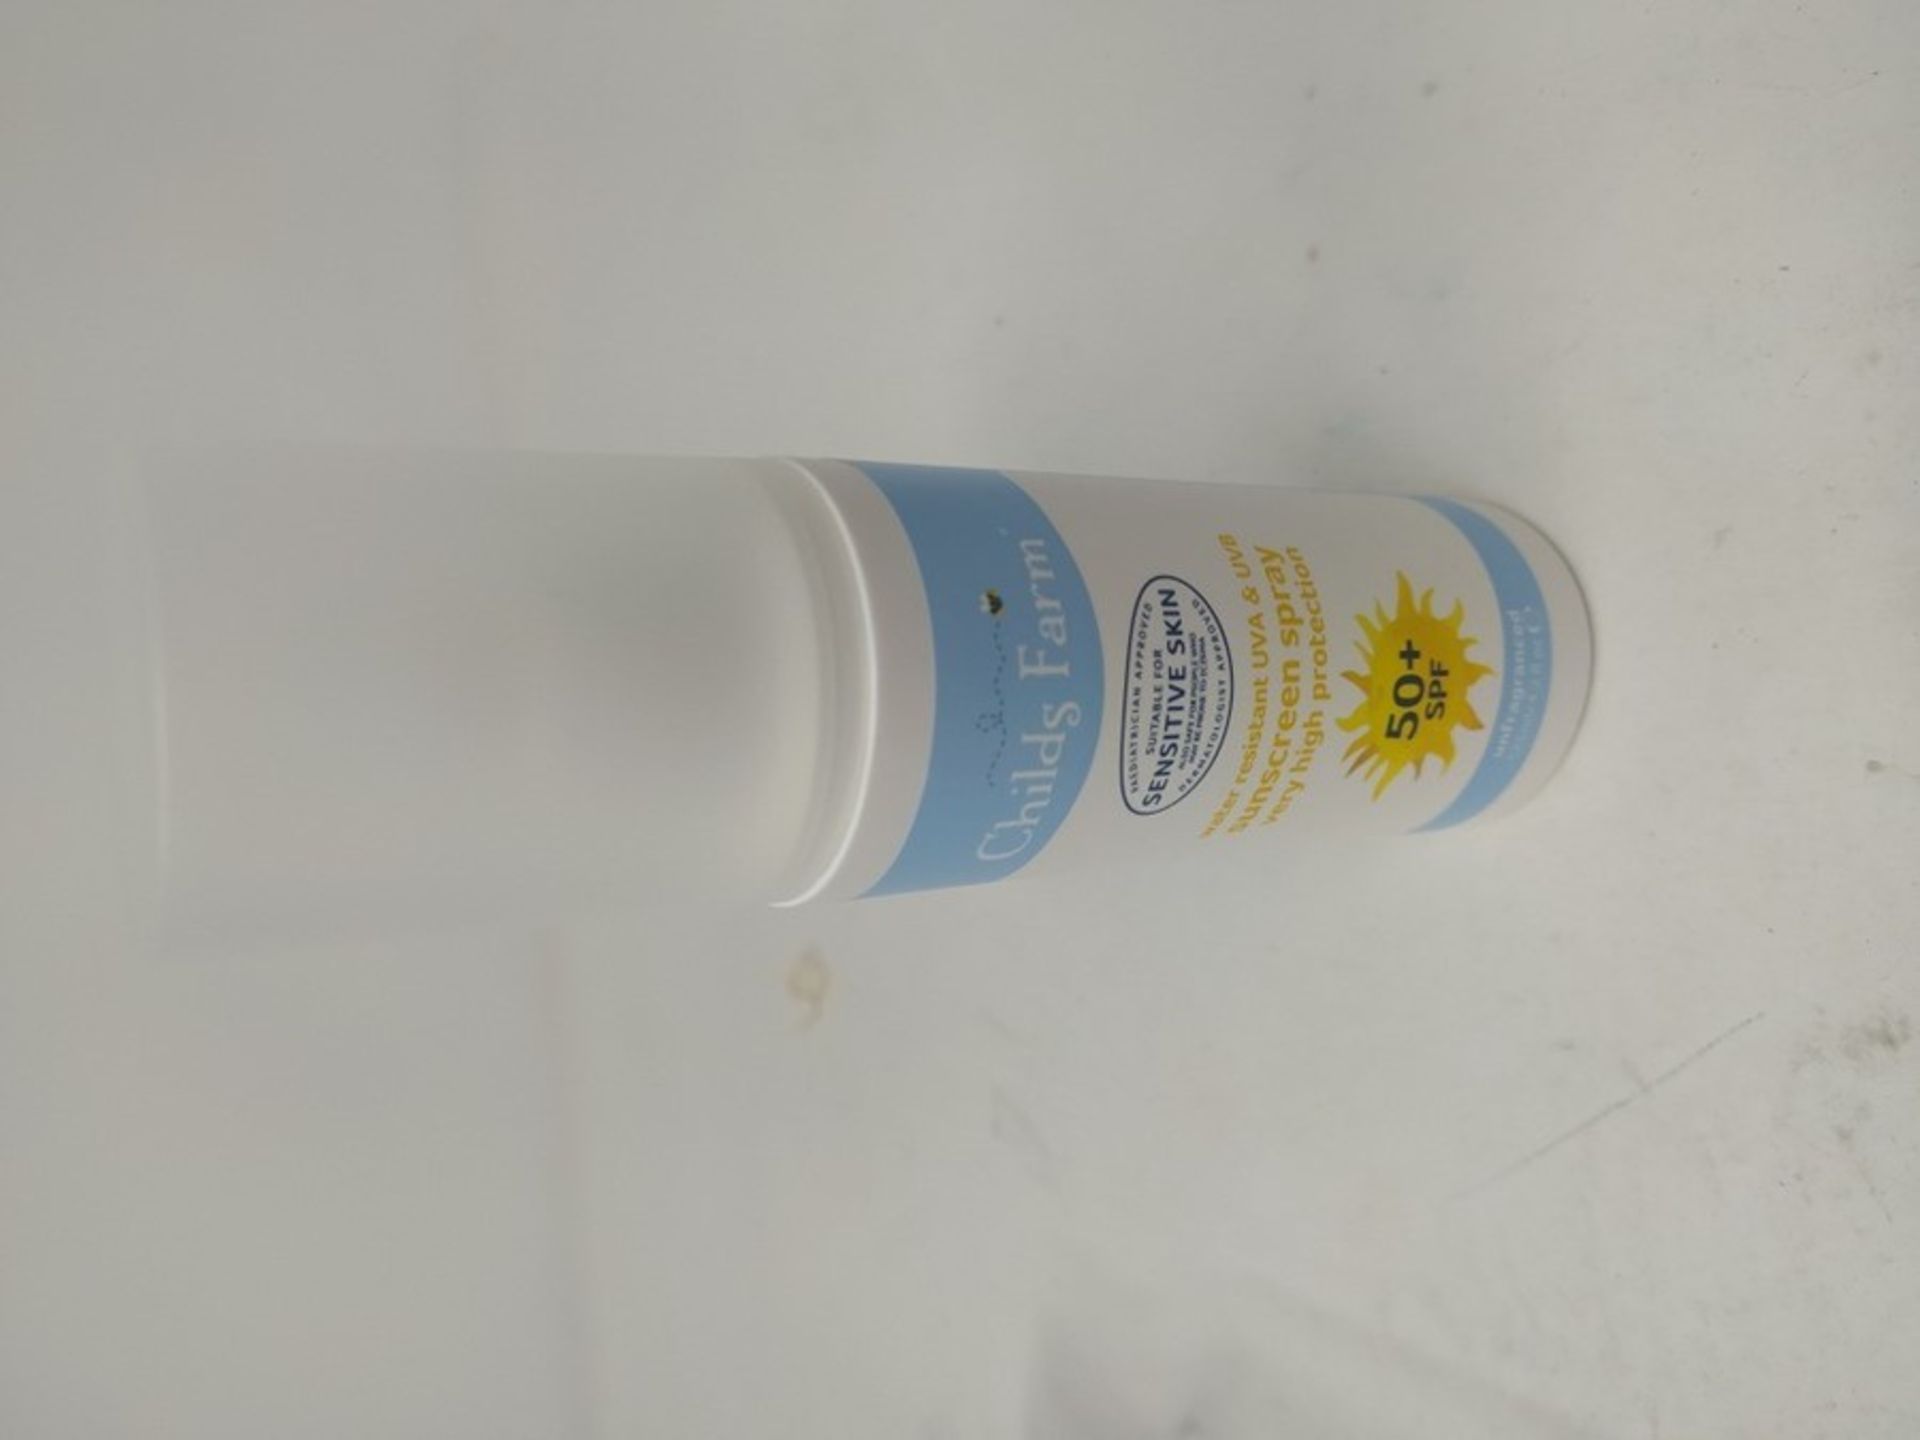 Childs Farm SPF 50+ Spray-On Sun Lotion Very High UVA/UVB Protection For Sensitive Ski - Image 2 of 2